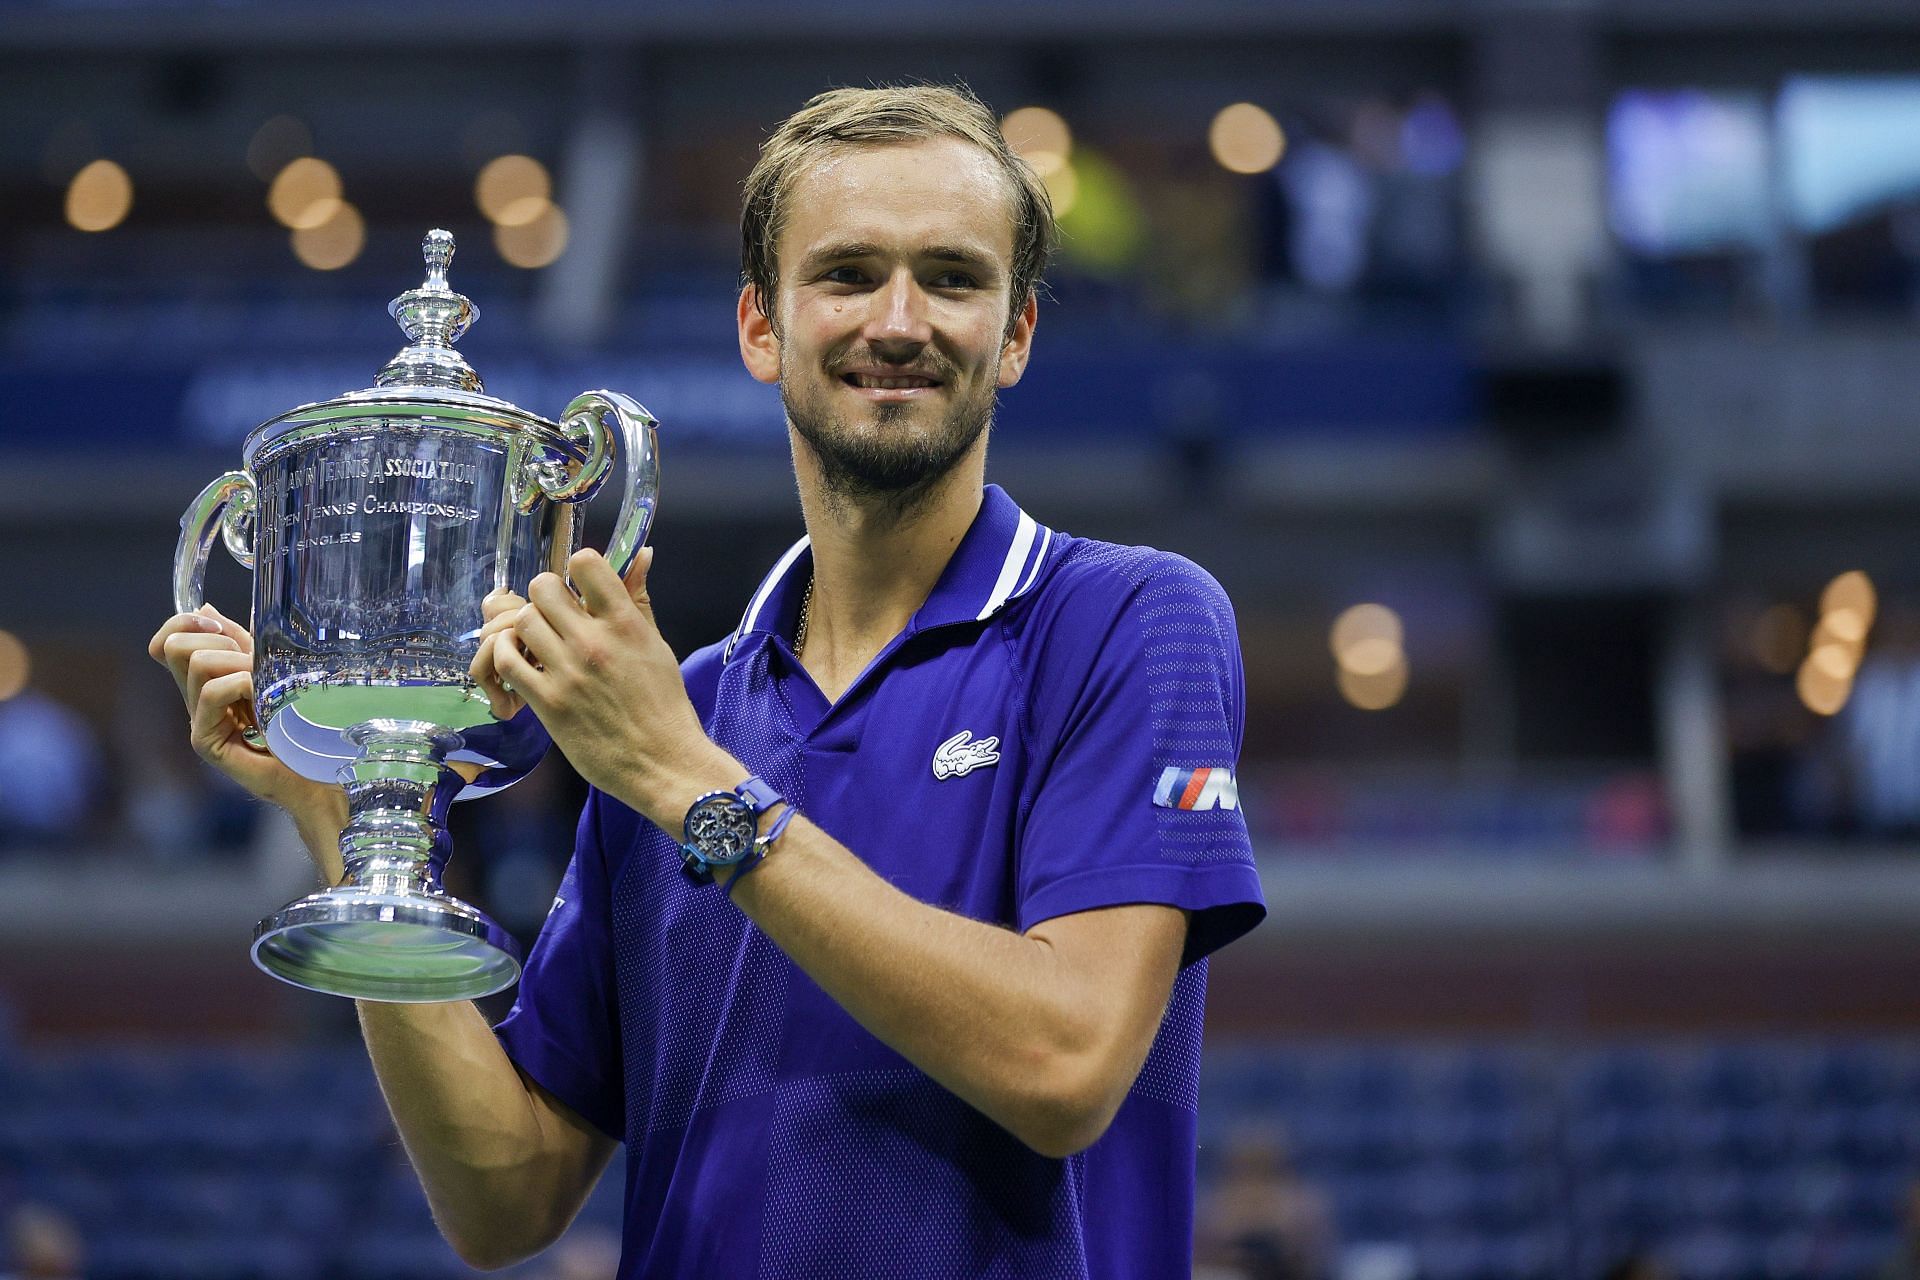 Daniil Medvedev won the 2021 US Open on his third wedding anniversary